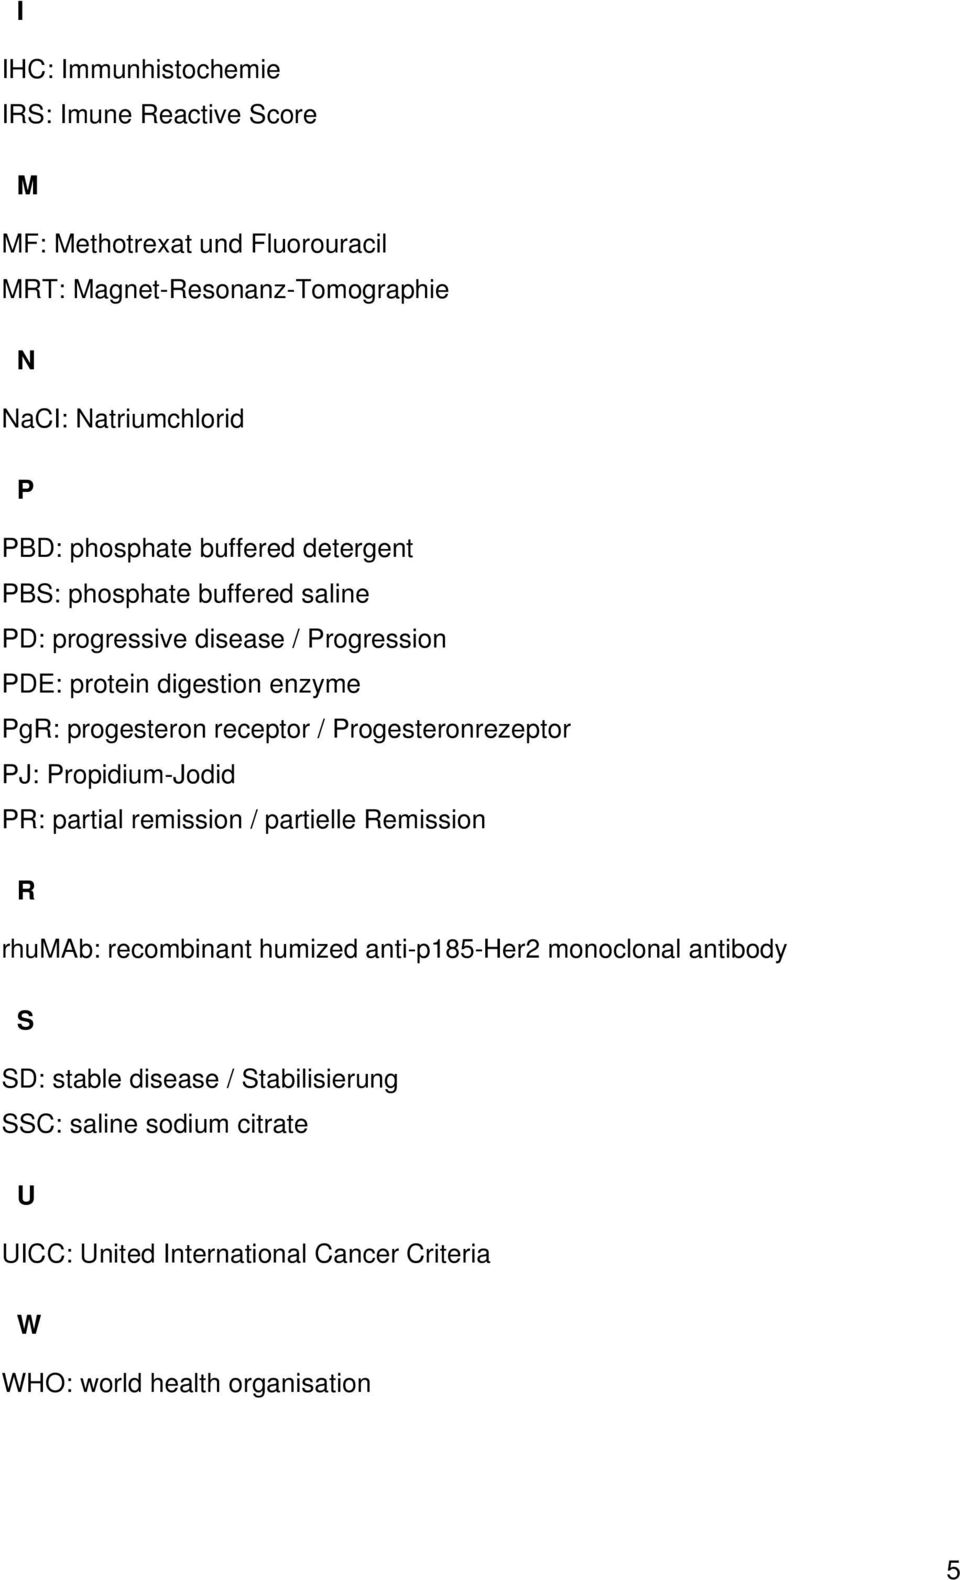 receptor / Progesteronrezeptor PJ: Propidium-Jodid PR: partial remission / partielle Remission R rhumab: recombinant humized anti-p185-her2